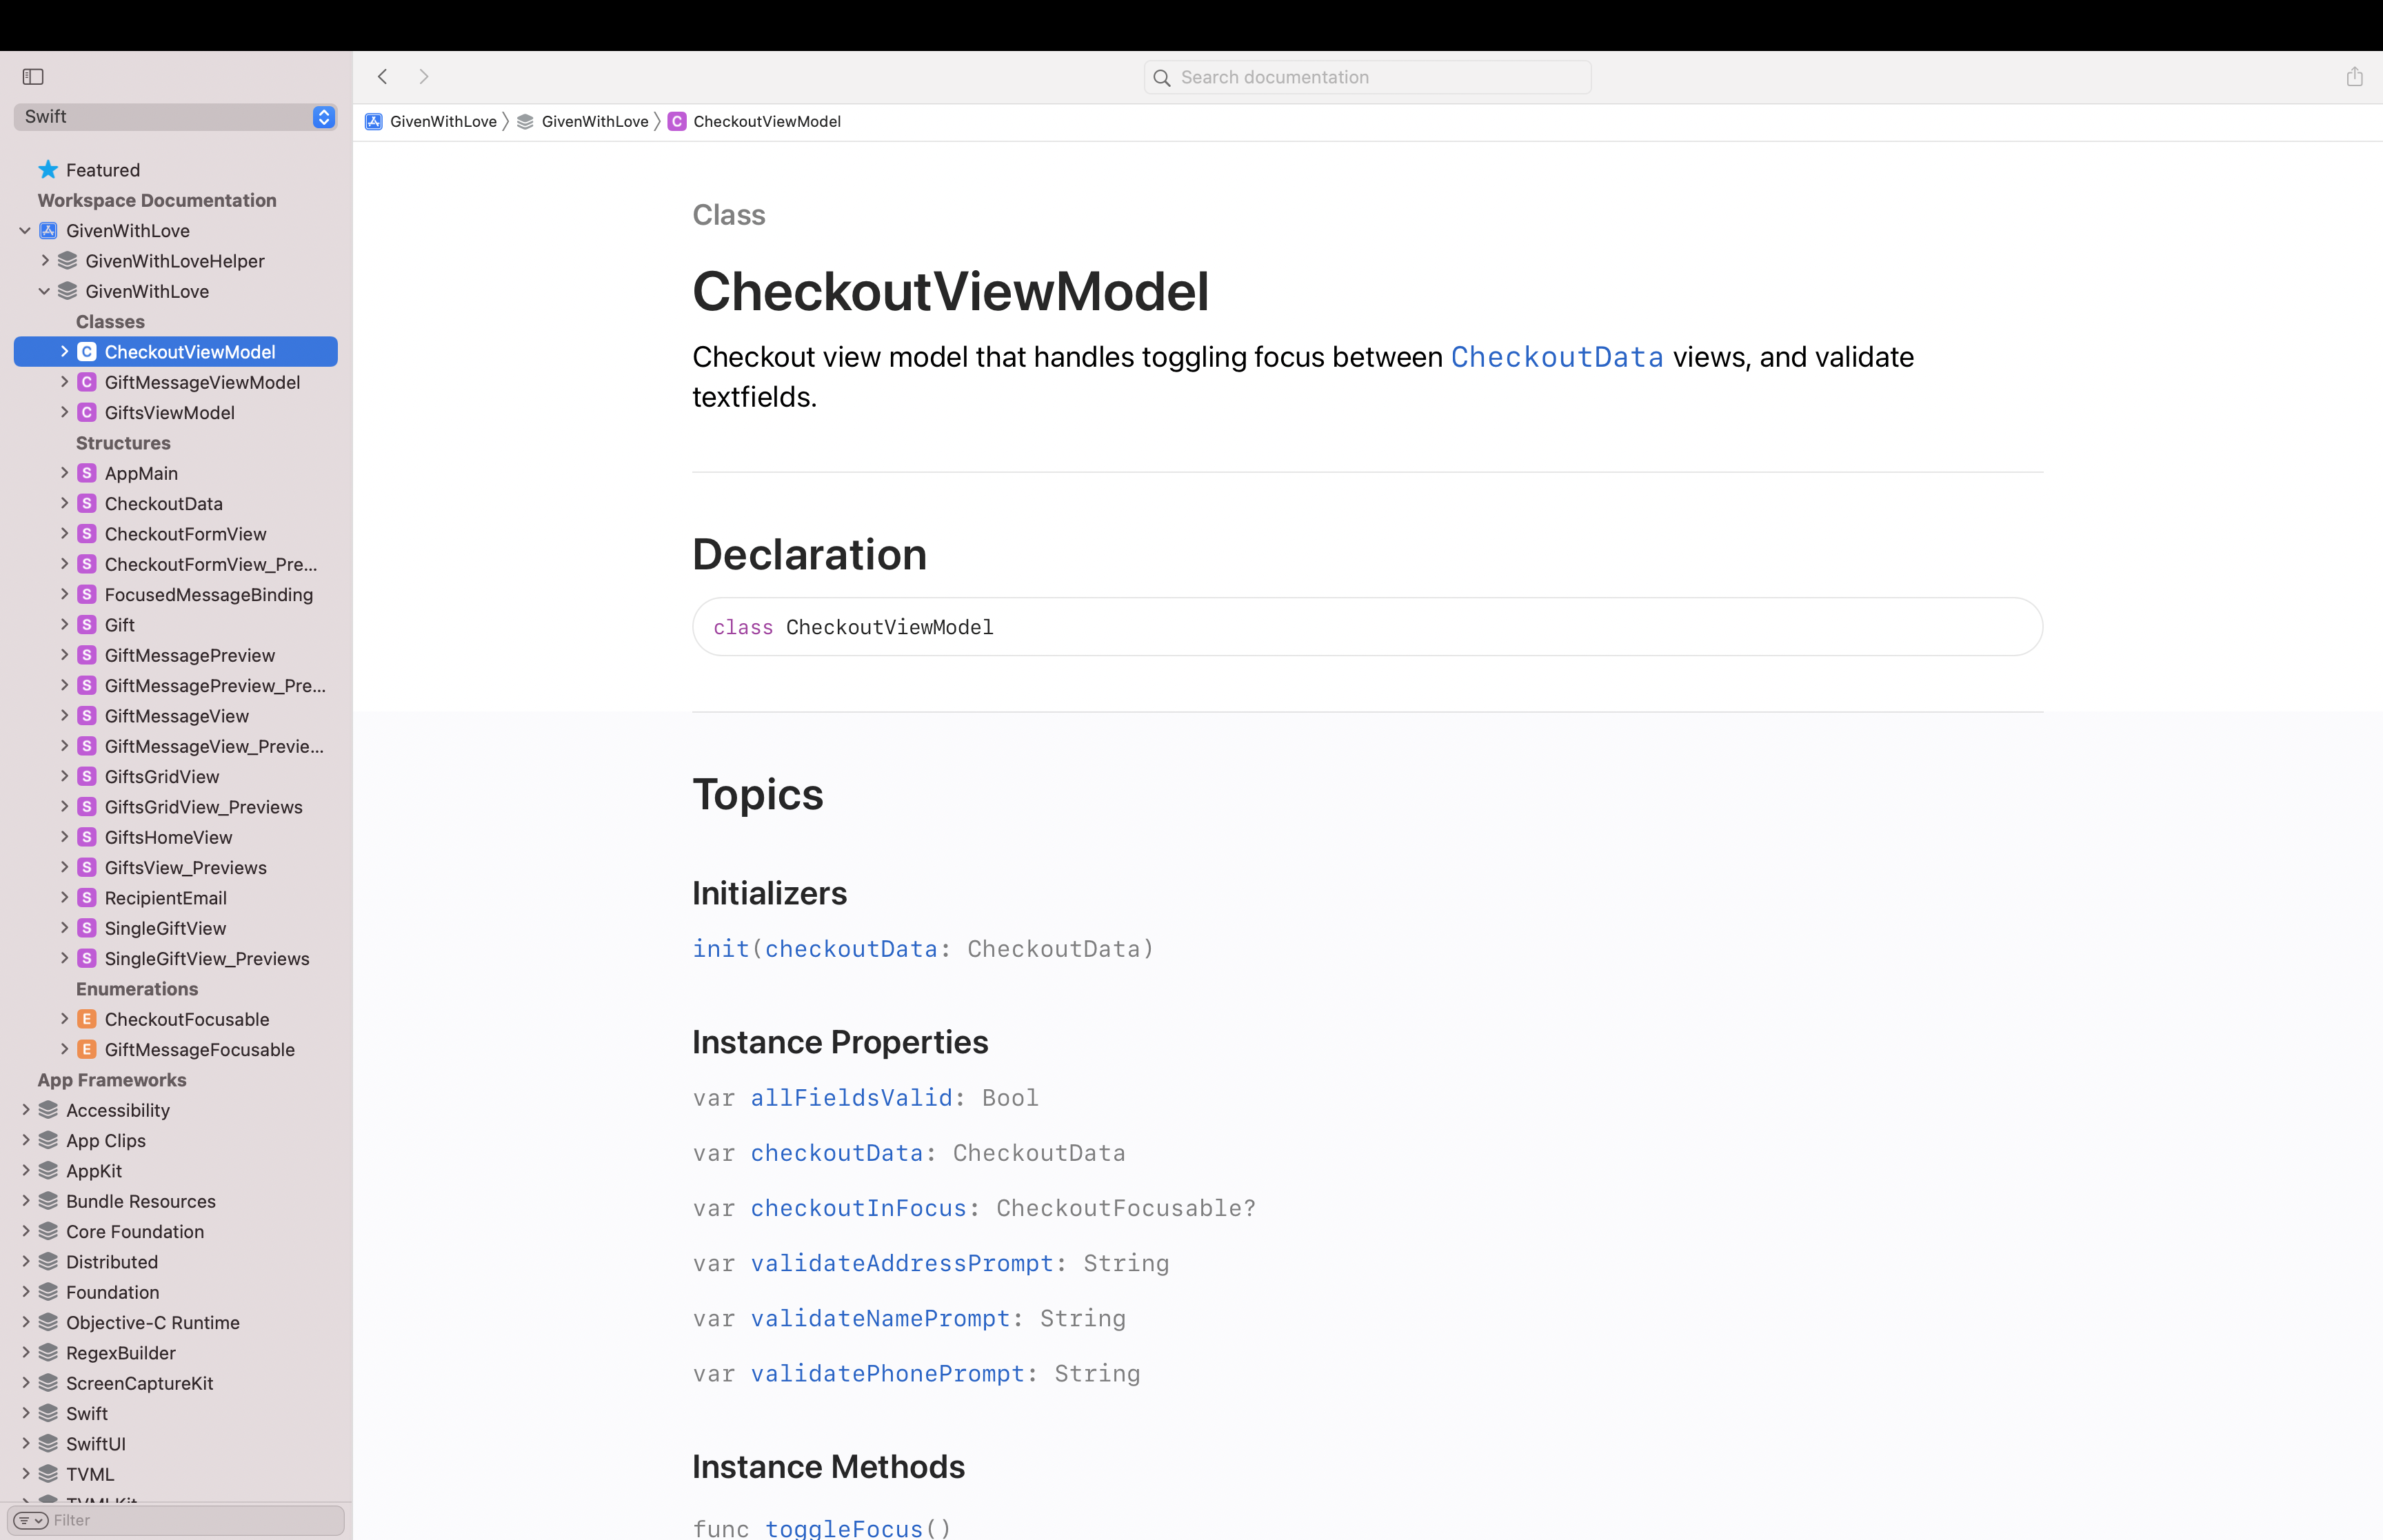 Preview of the CheckoutViewModel DocC documentation.